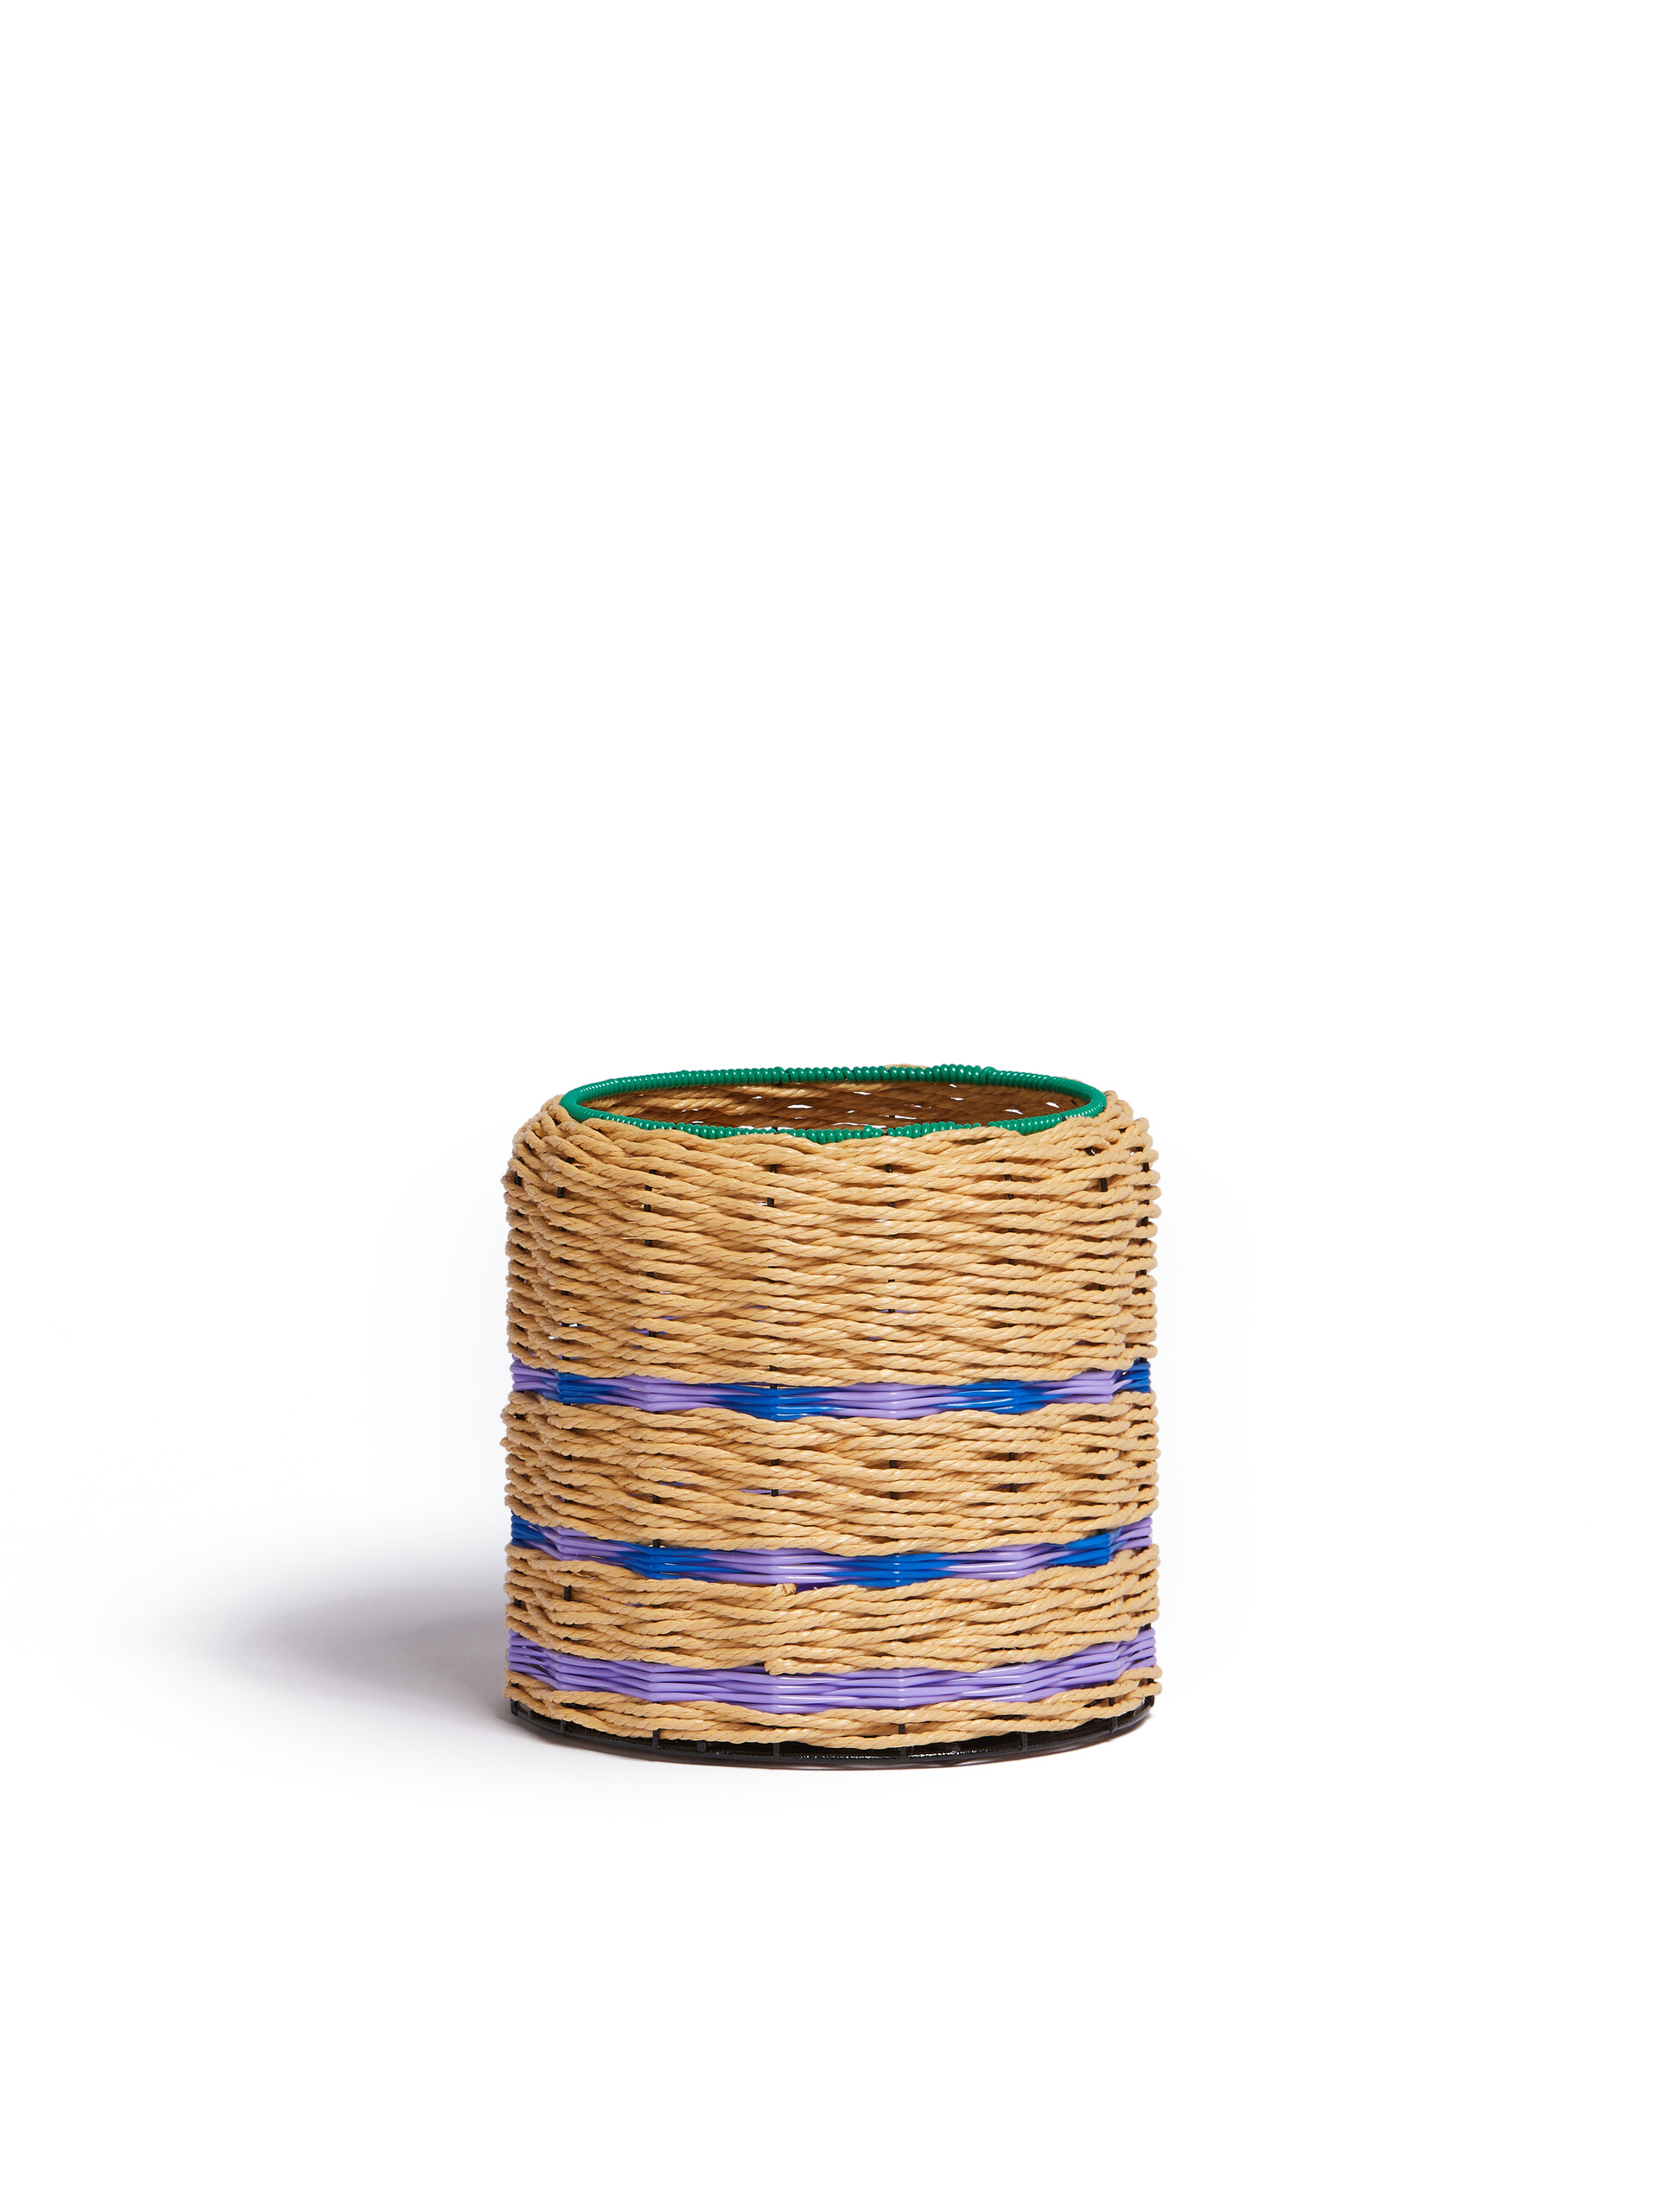 MARNI MARKET blue raffia-effect basket - Accessories - Image 2